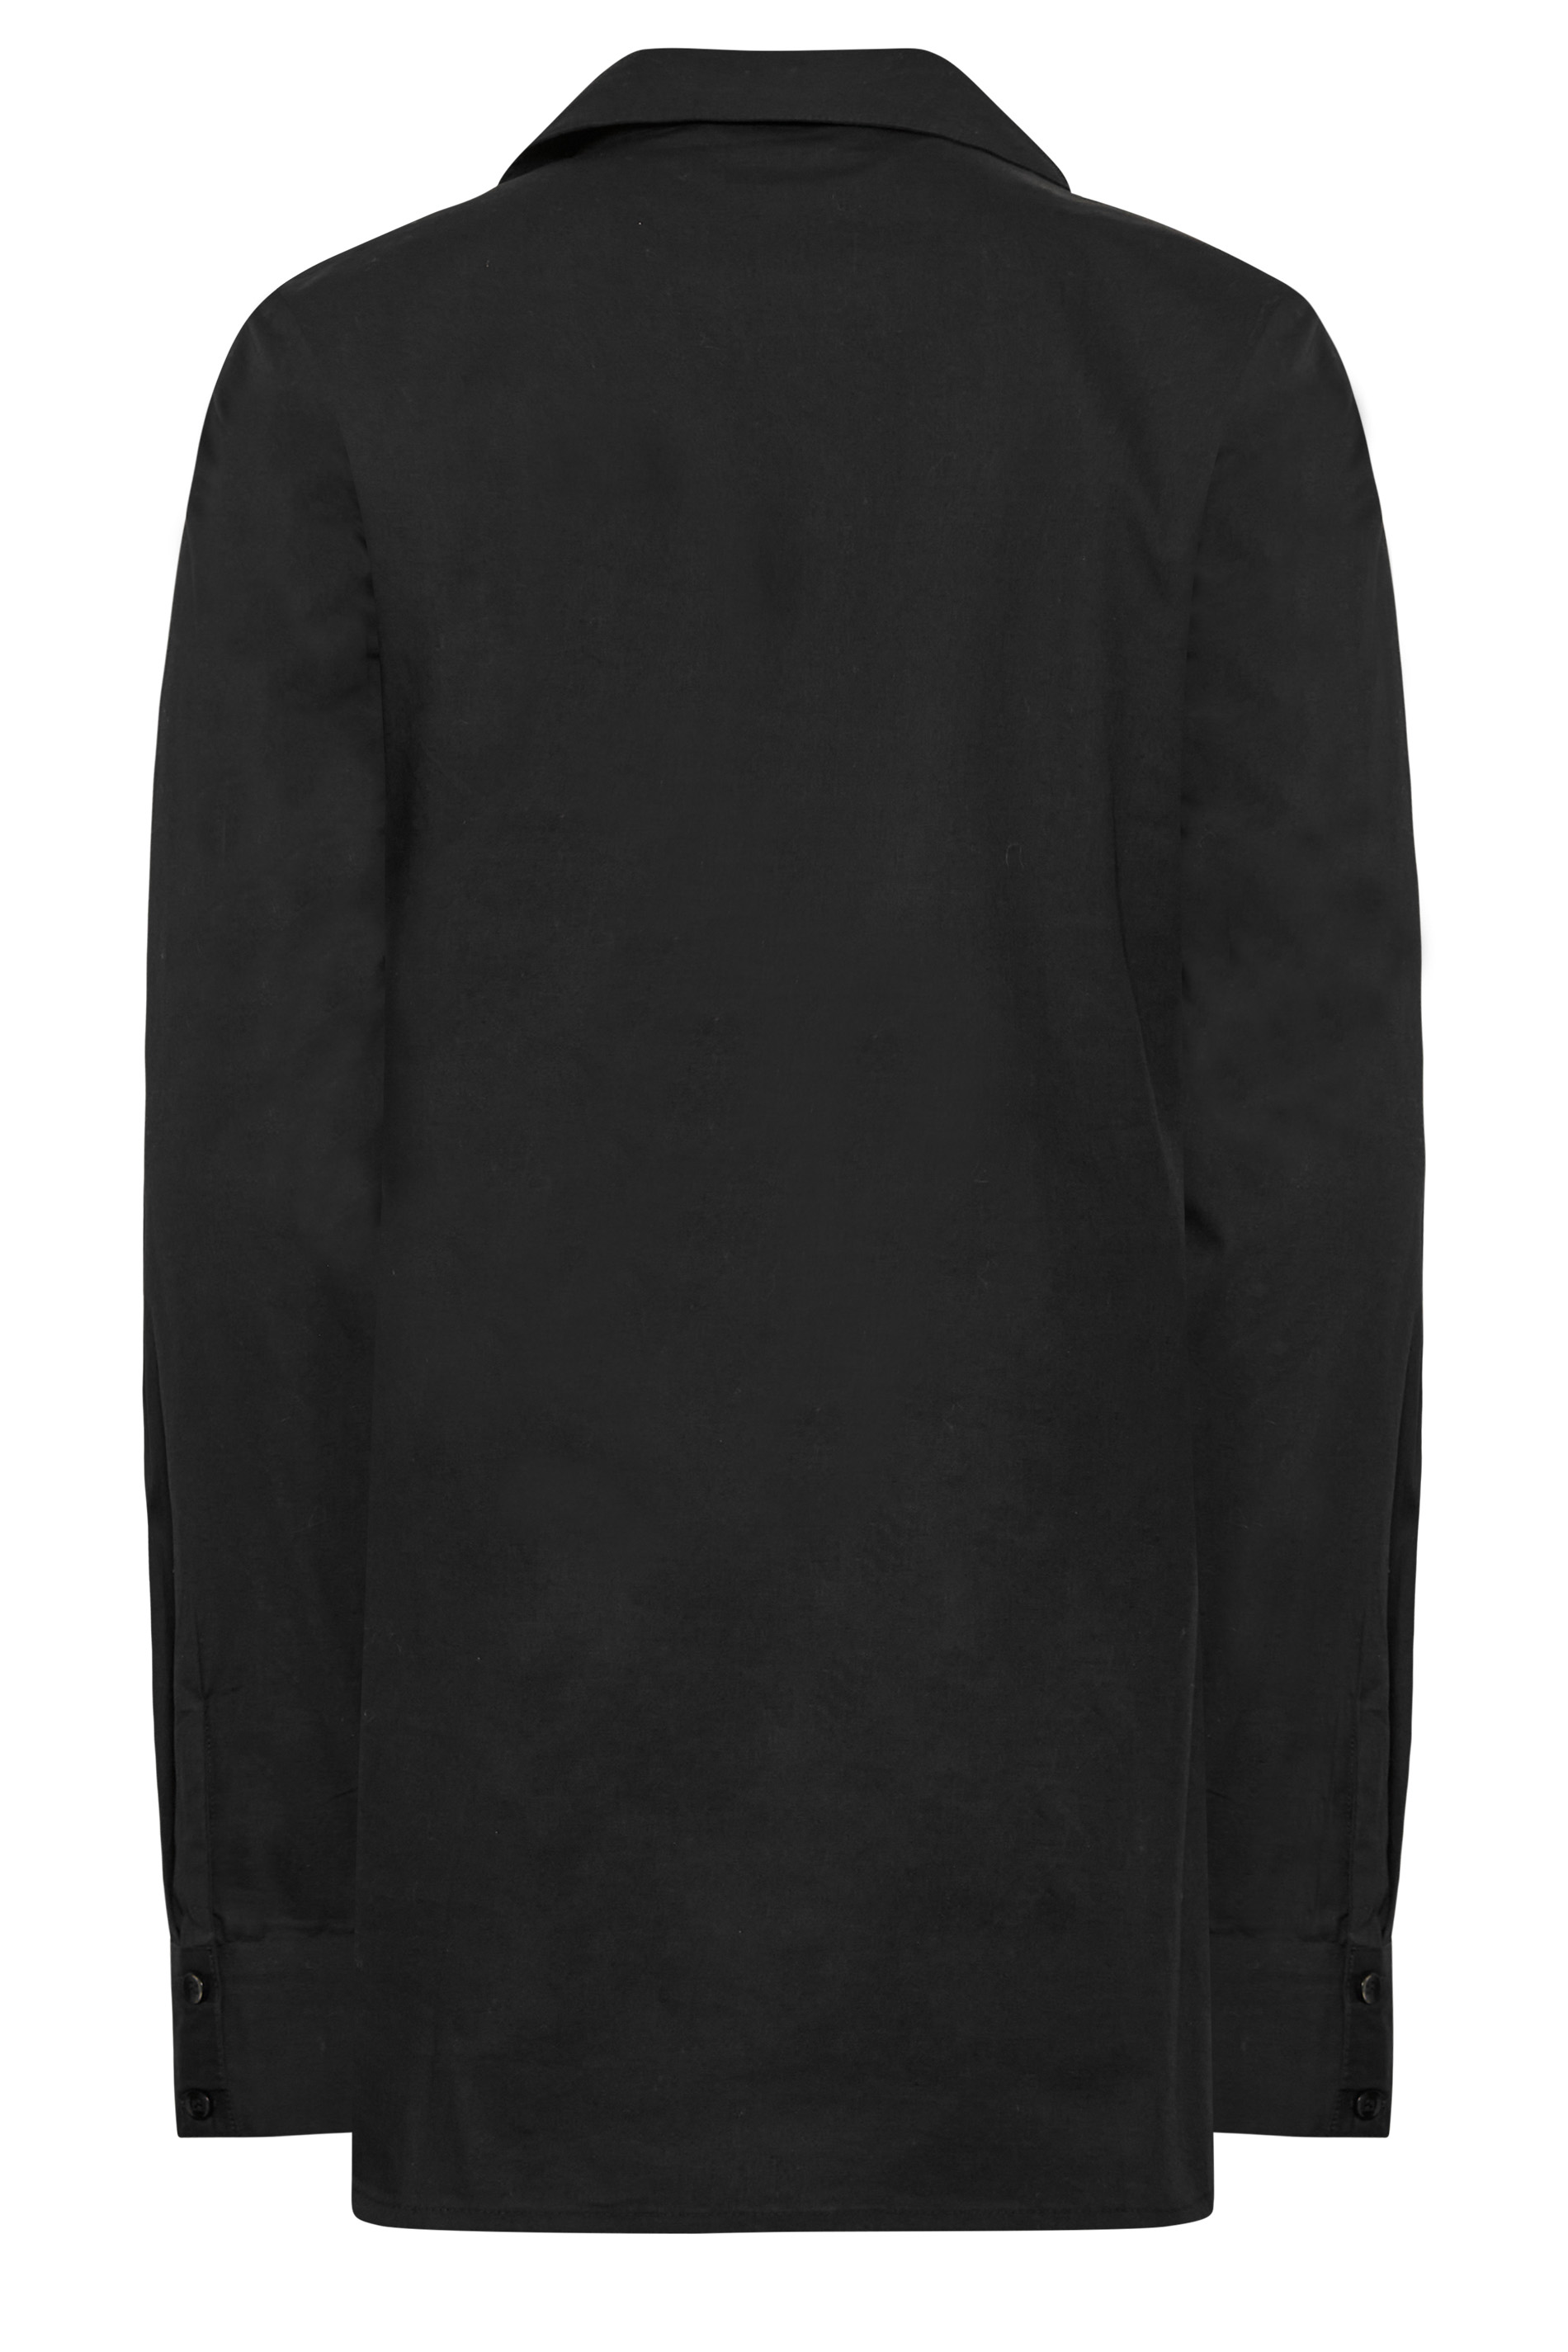 LTS Tall Women's Black Fitted Cotton Shirt | Long Tall Sally 3